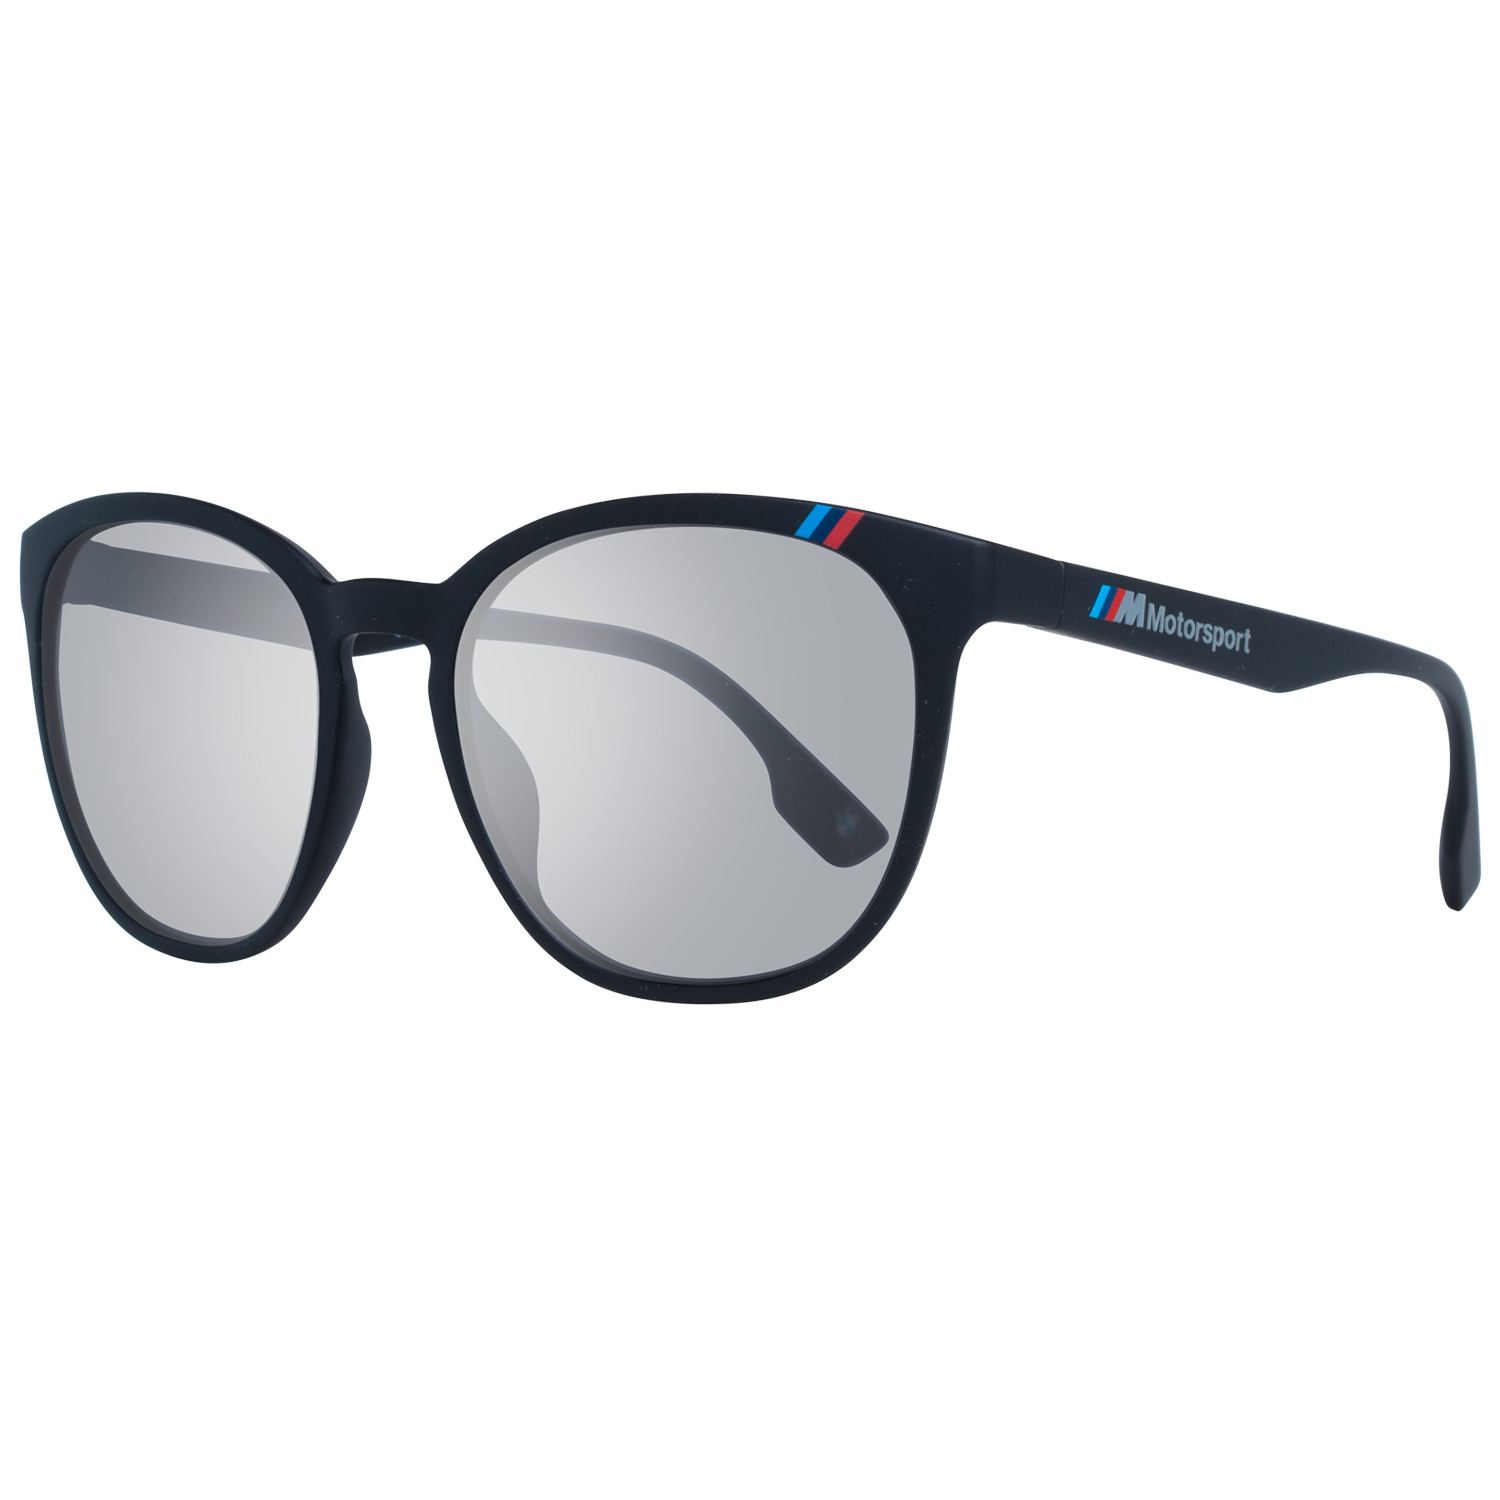 BMW Motorsport sunglasses BS 0004 02A - Contact lenses, sung